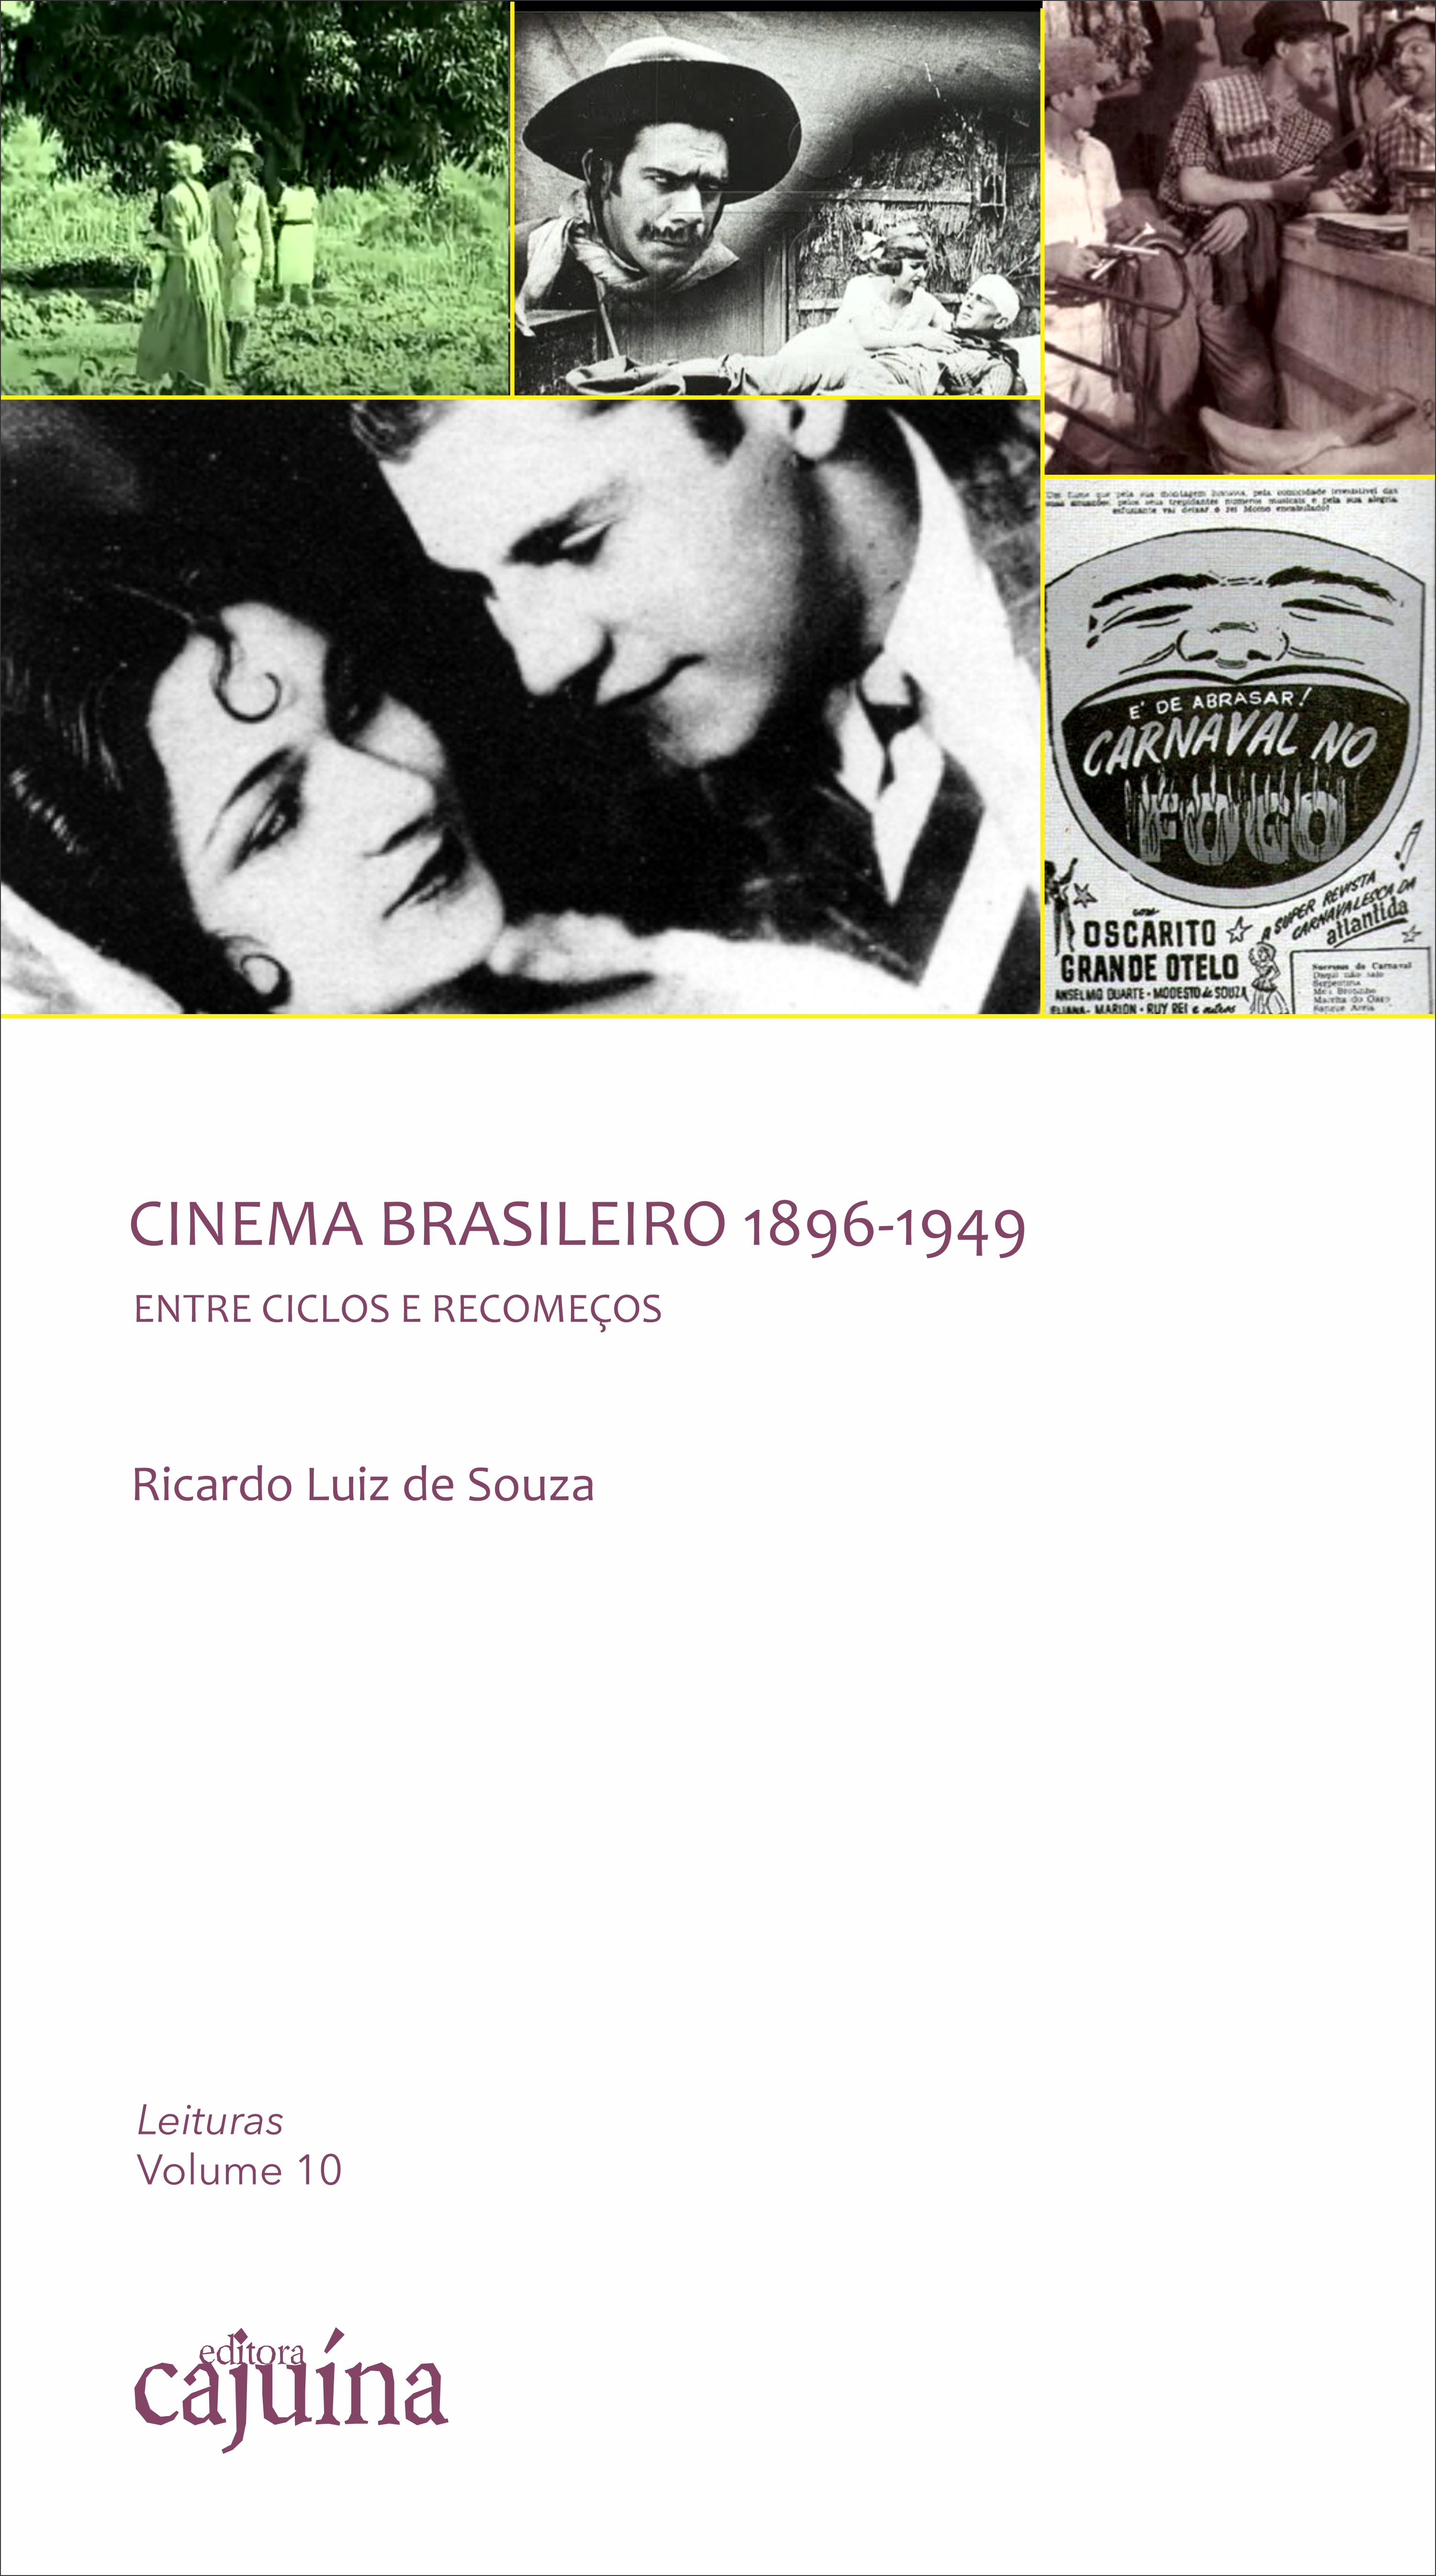 Cinema brasileiro 1896-1949